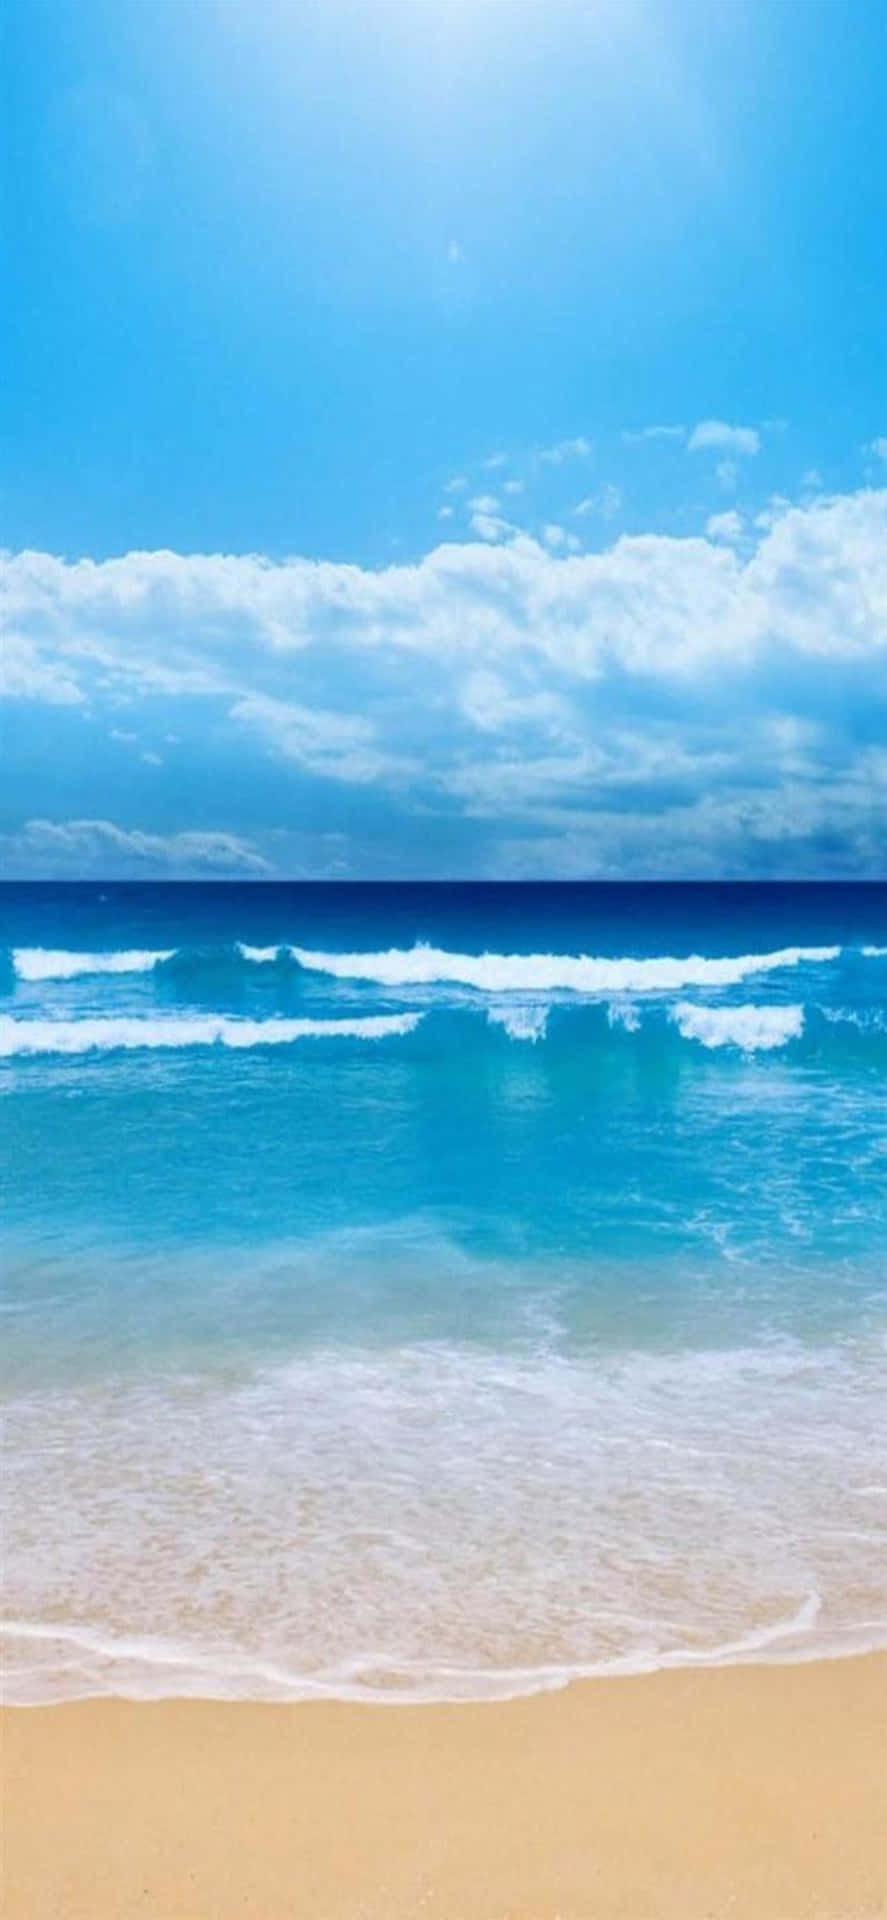 iPhone XS Beach Crashing Waves Background